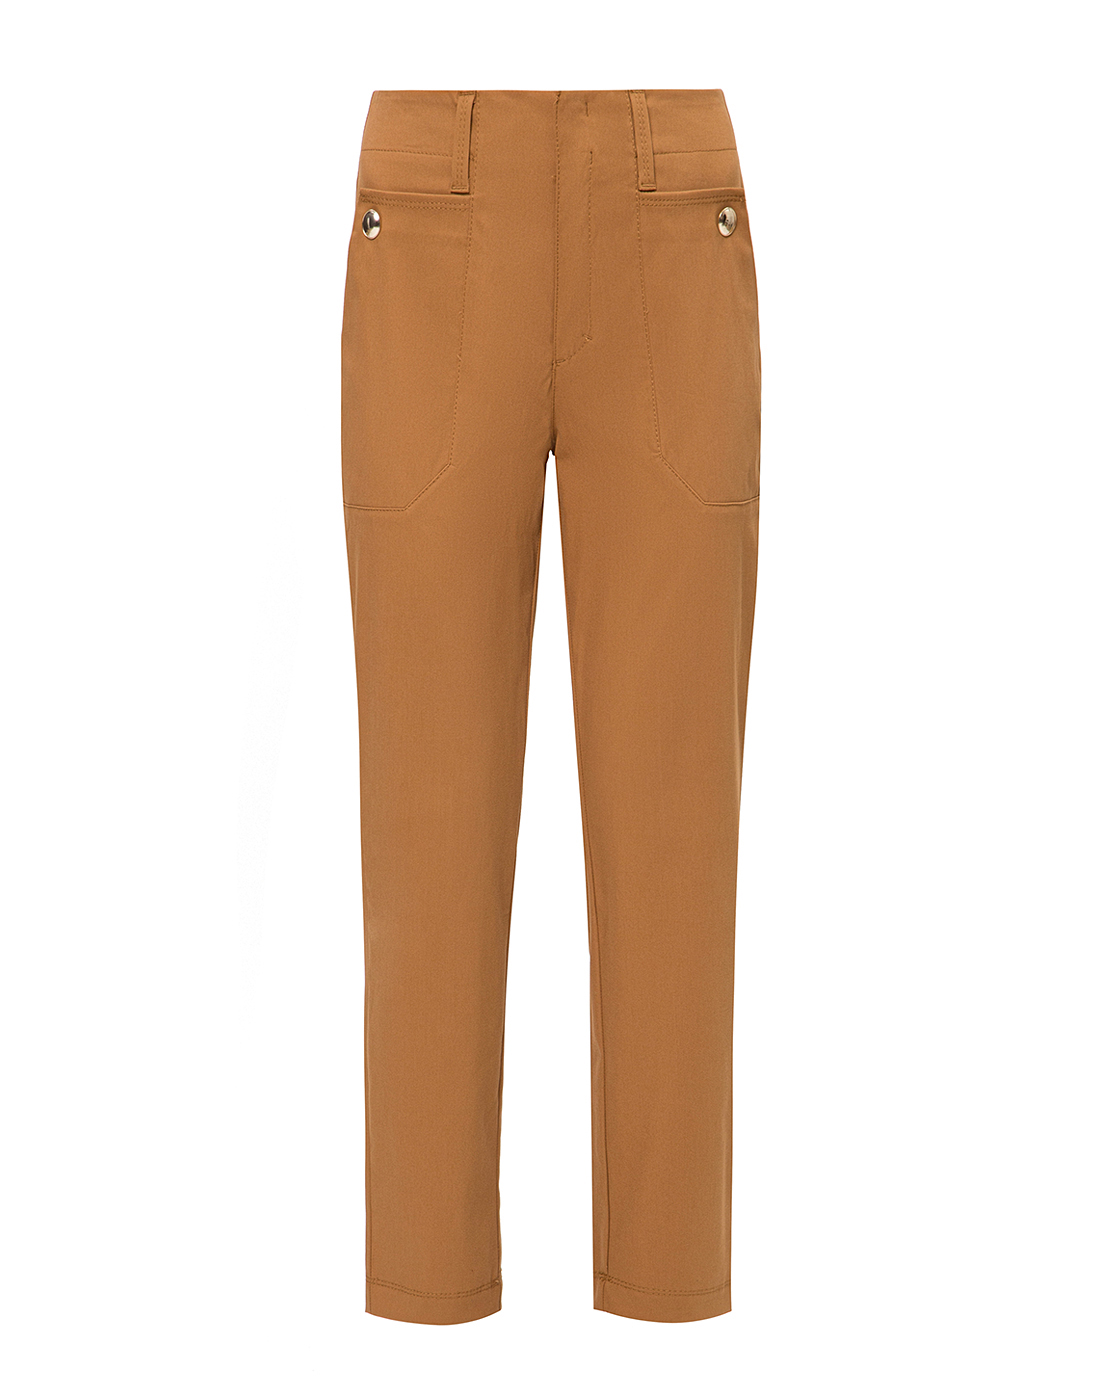 Женские коричневые брюки Dorothee Schumacher S440313-1